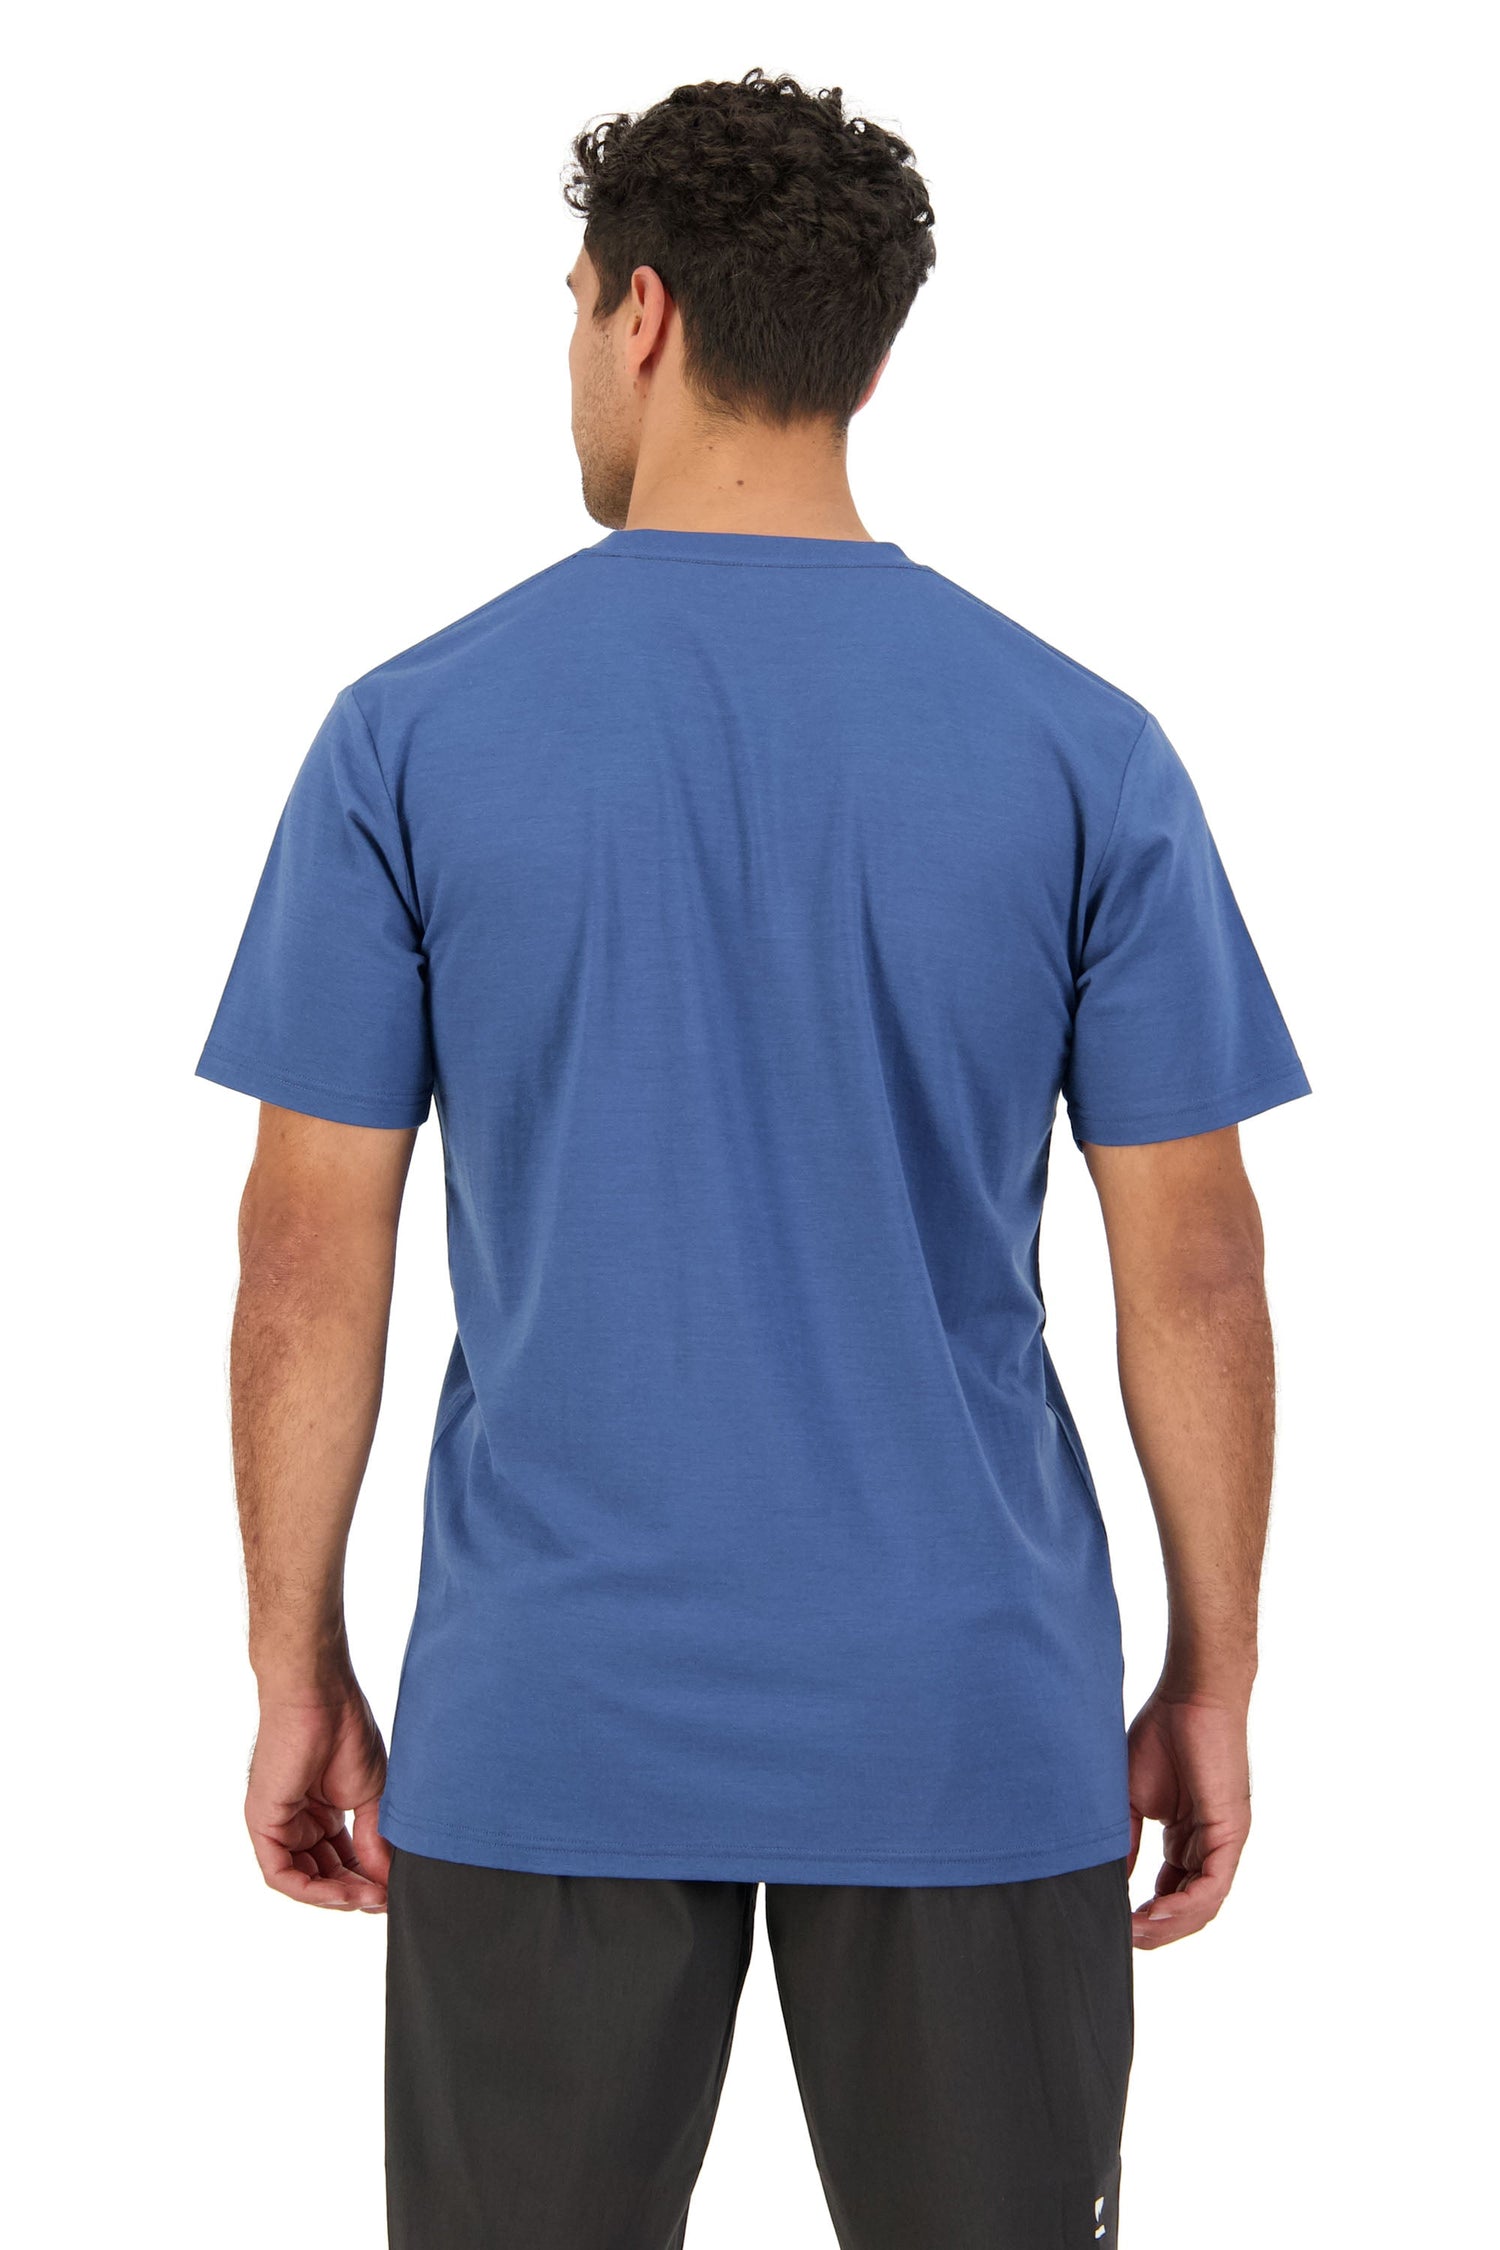 Mons Royale - M's Icon T-Shirt - Merino Wool - Weekendbee - sustainable sportswear